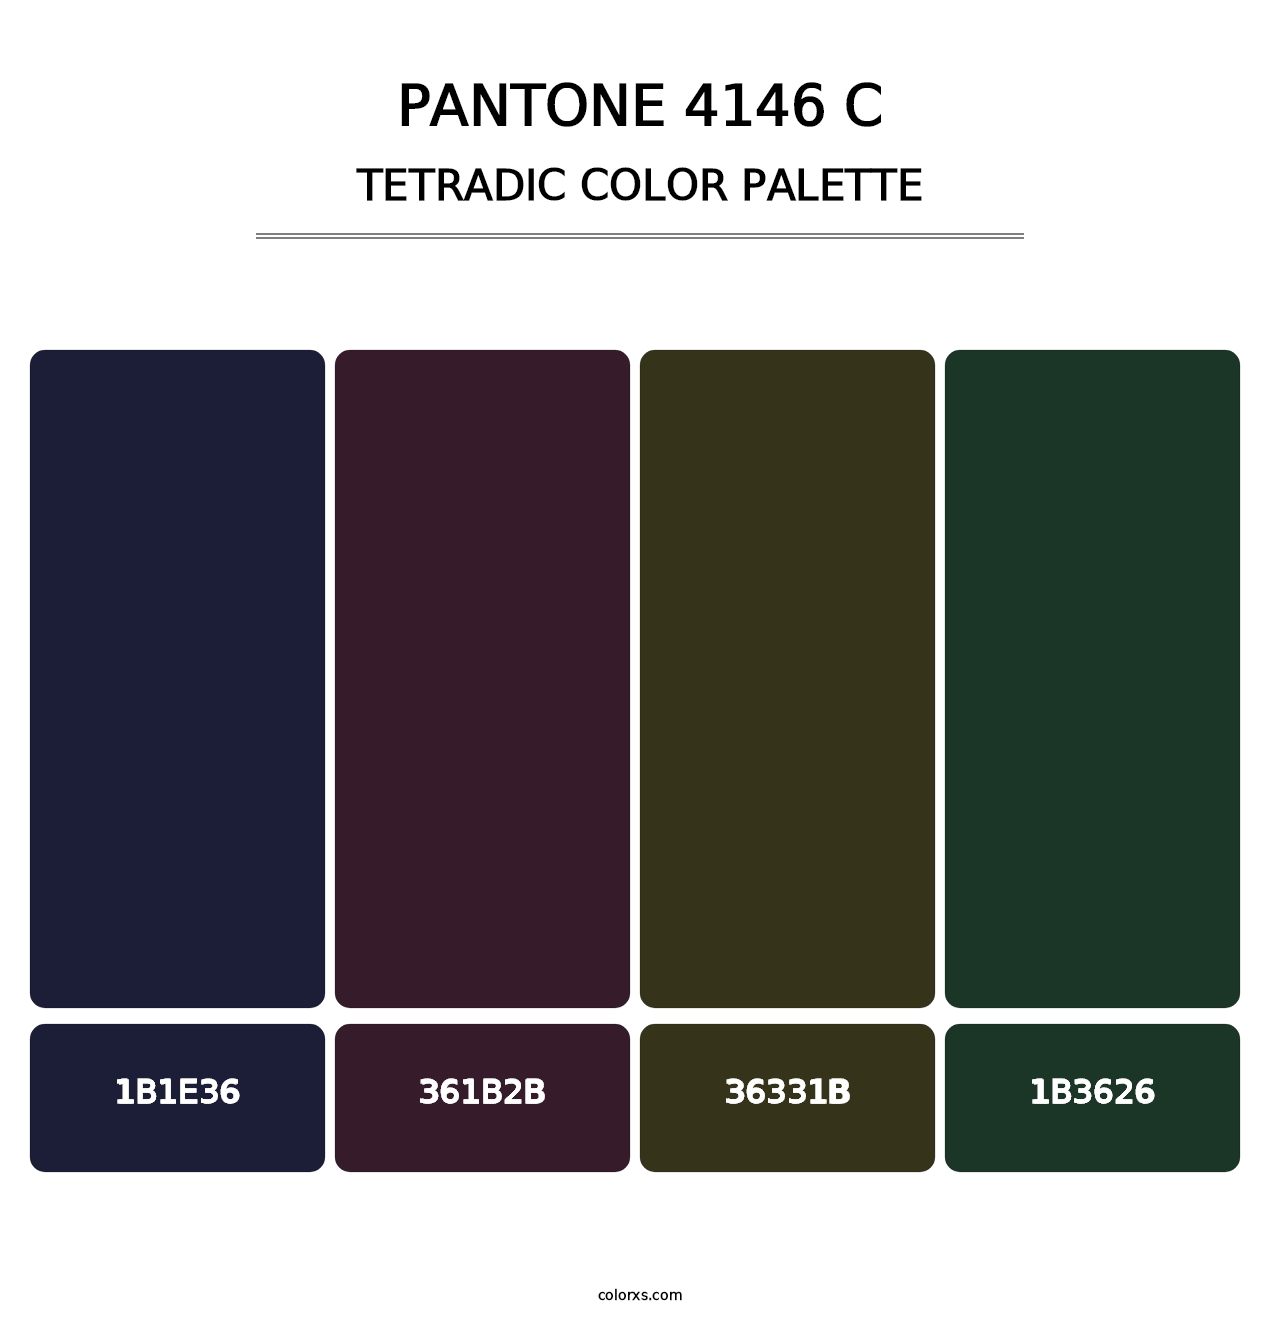 PANTONE 4146 C - Tetradic Color Palette